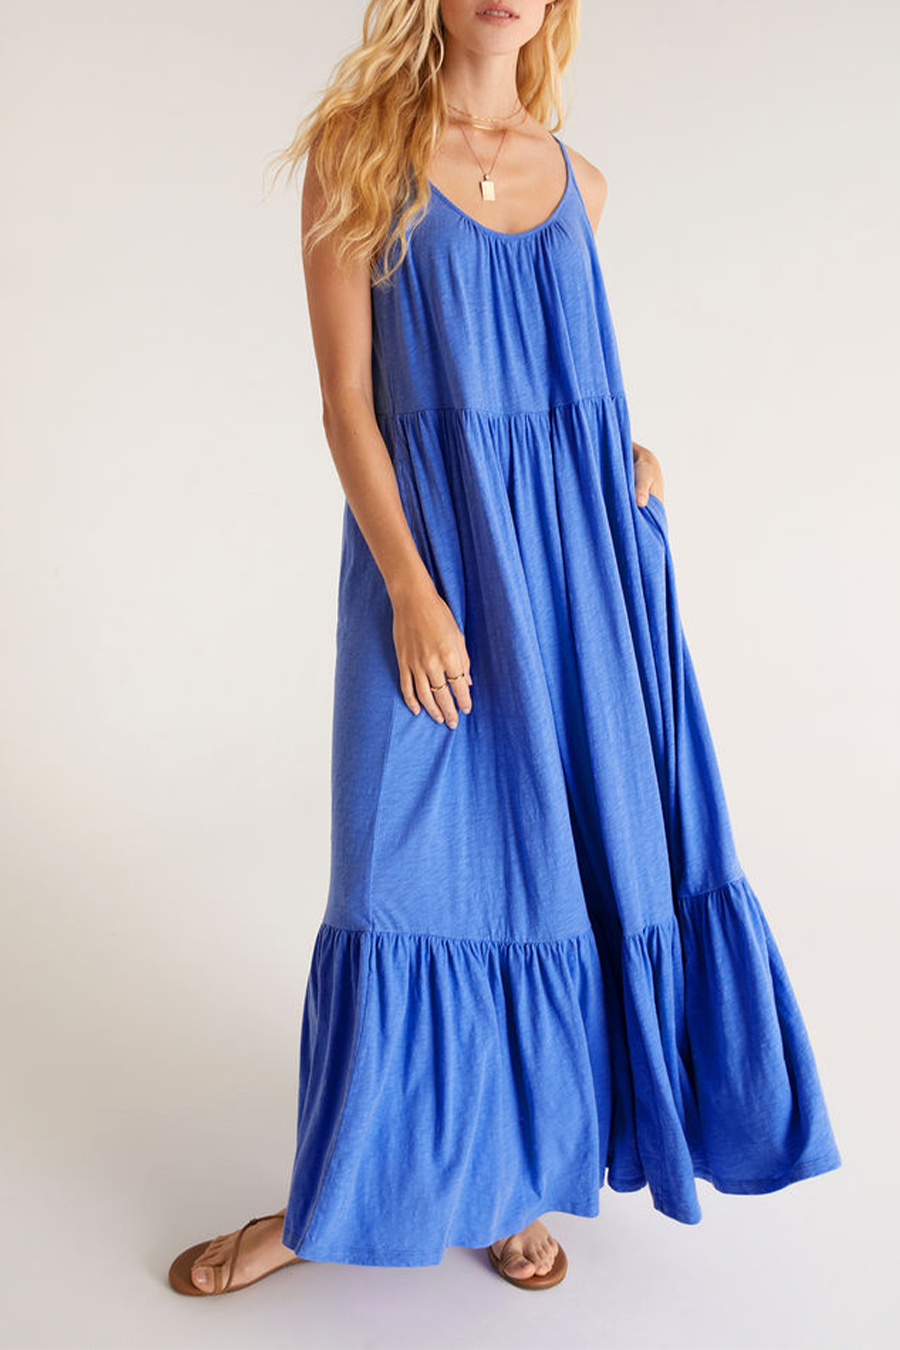 Lido Slub Midi Dress | Pacific Blue - Main Image Number 1 of 1